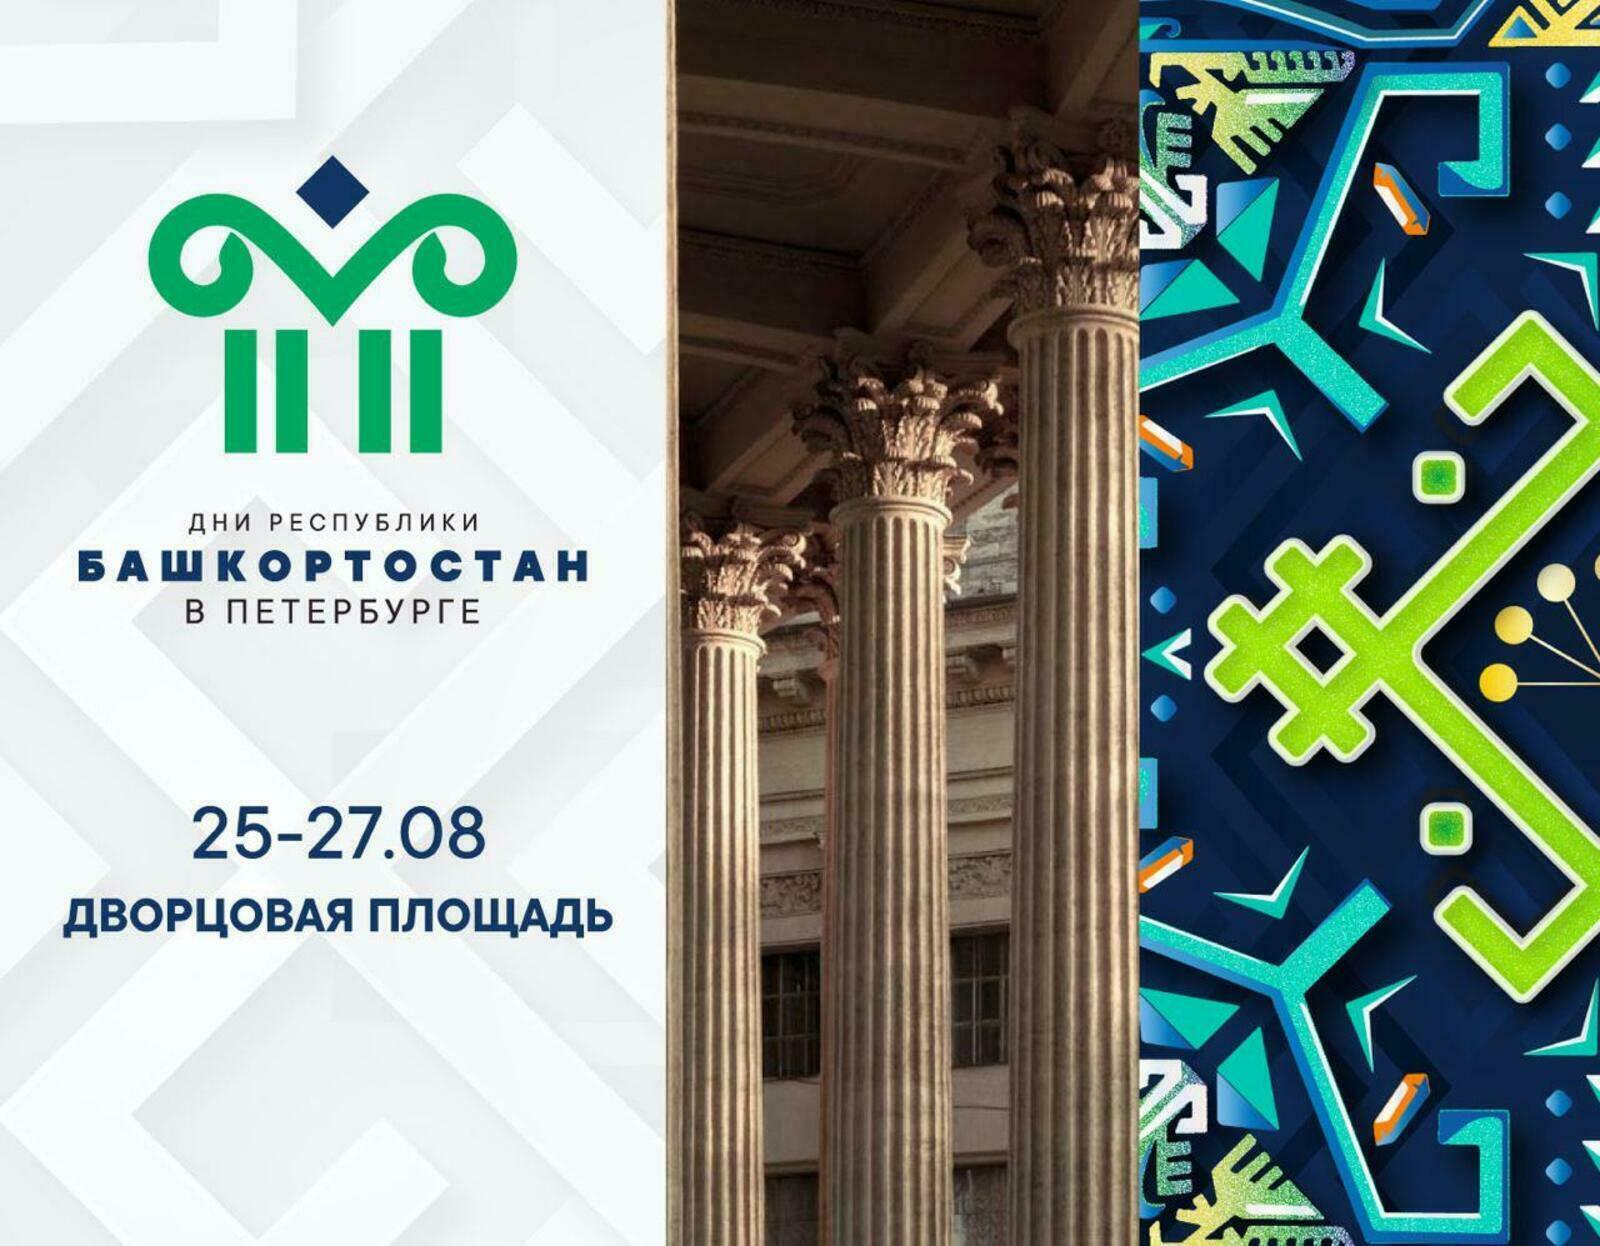 В Санкт-Петербурге Башкортостан представит грандиозную культурную программу